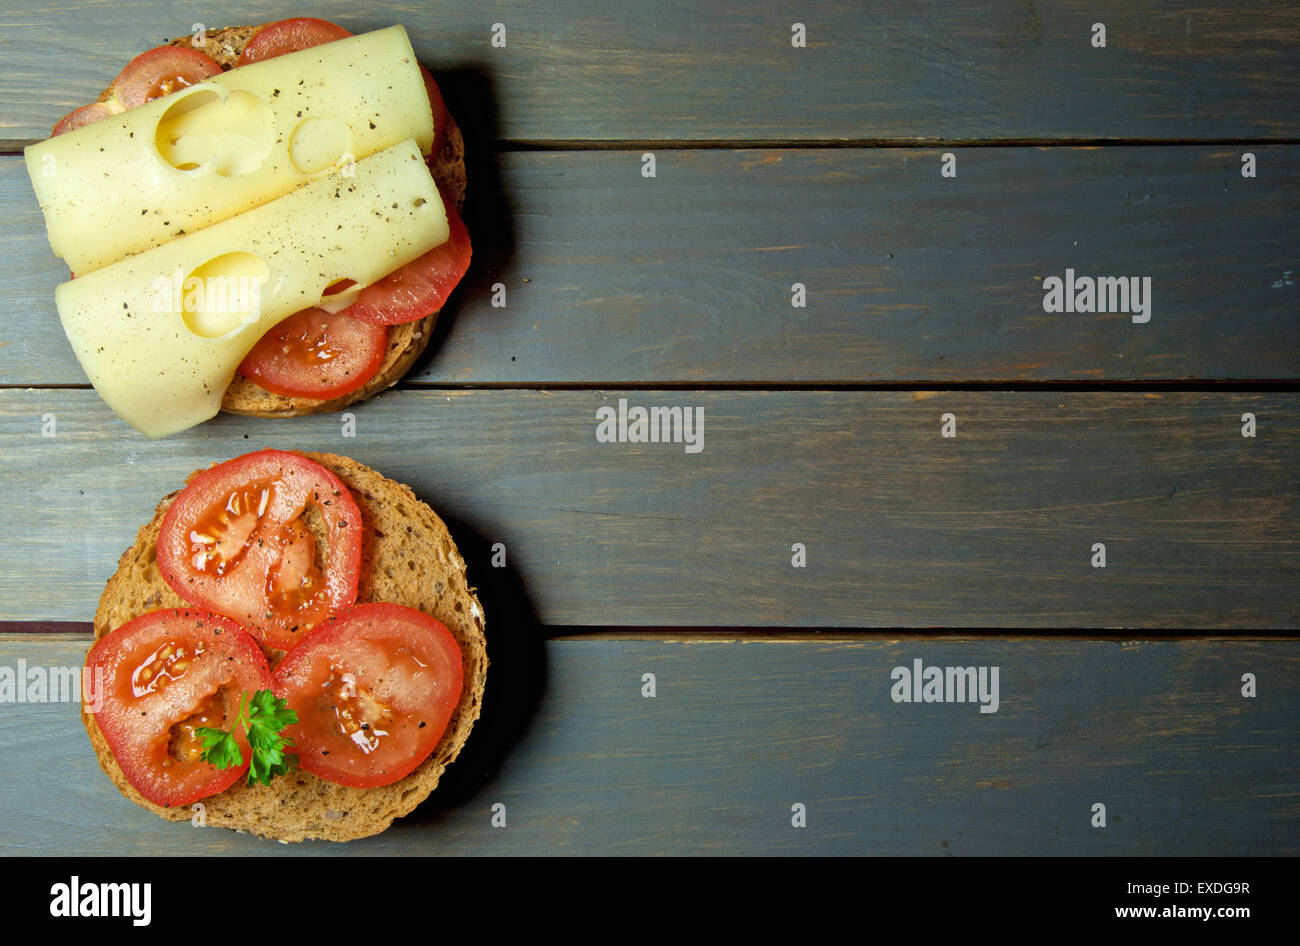 Deli sandwich with copy space Stock Photo